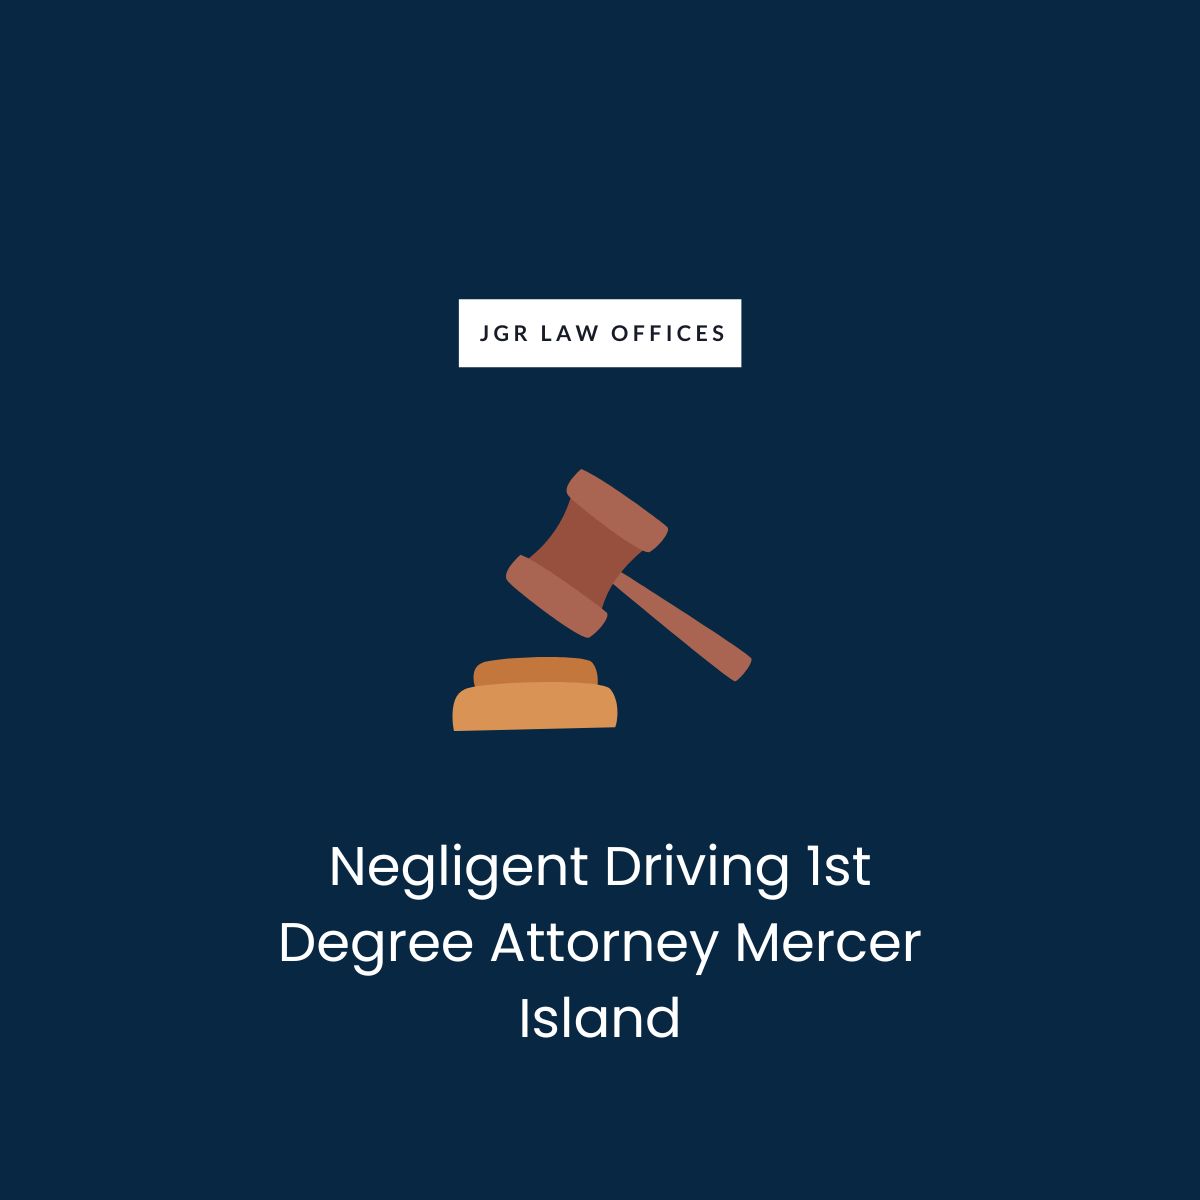 Negligent Driving 1st Degree Attorney Mercer Island Negligent Driving 1st Degree